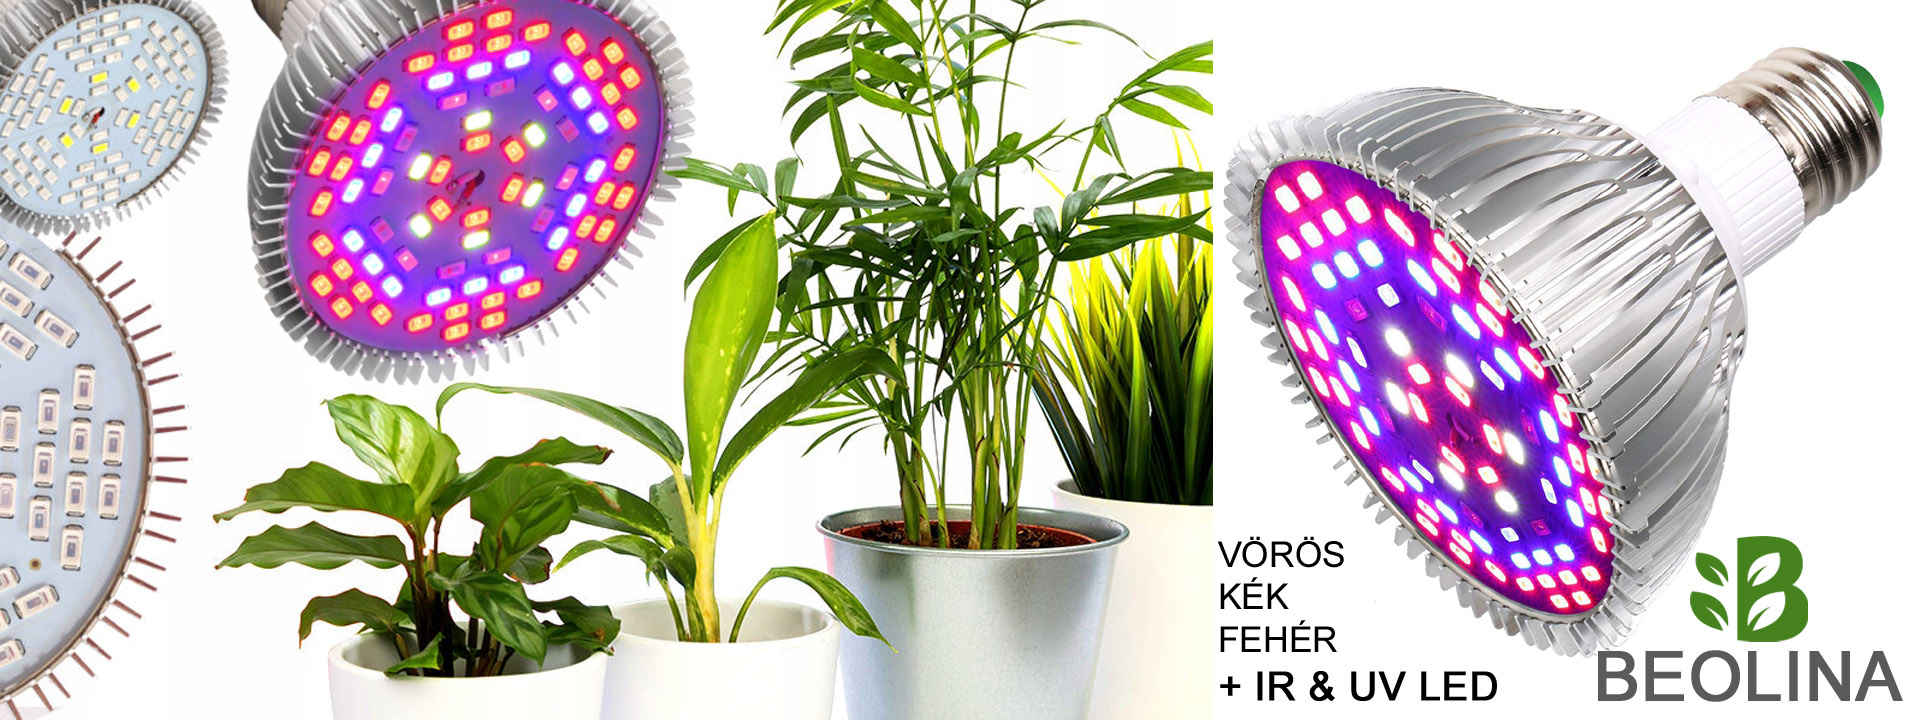 Beolina Növénynevelő LED lámpák